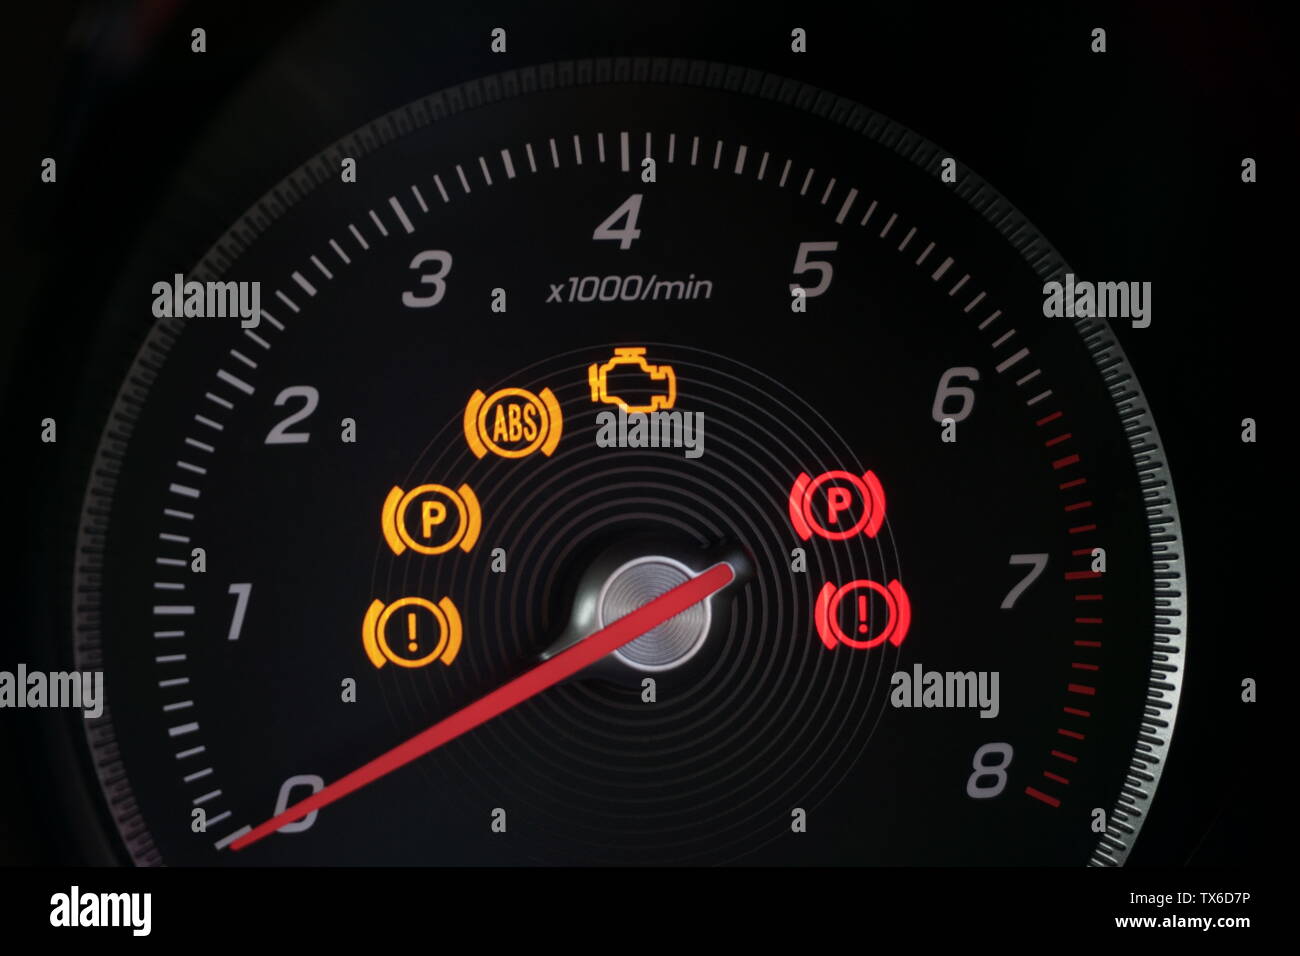 Tachometer with warning lights illuminated Stock Photo